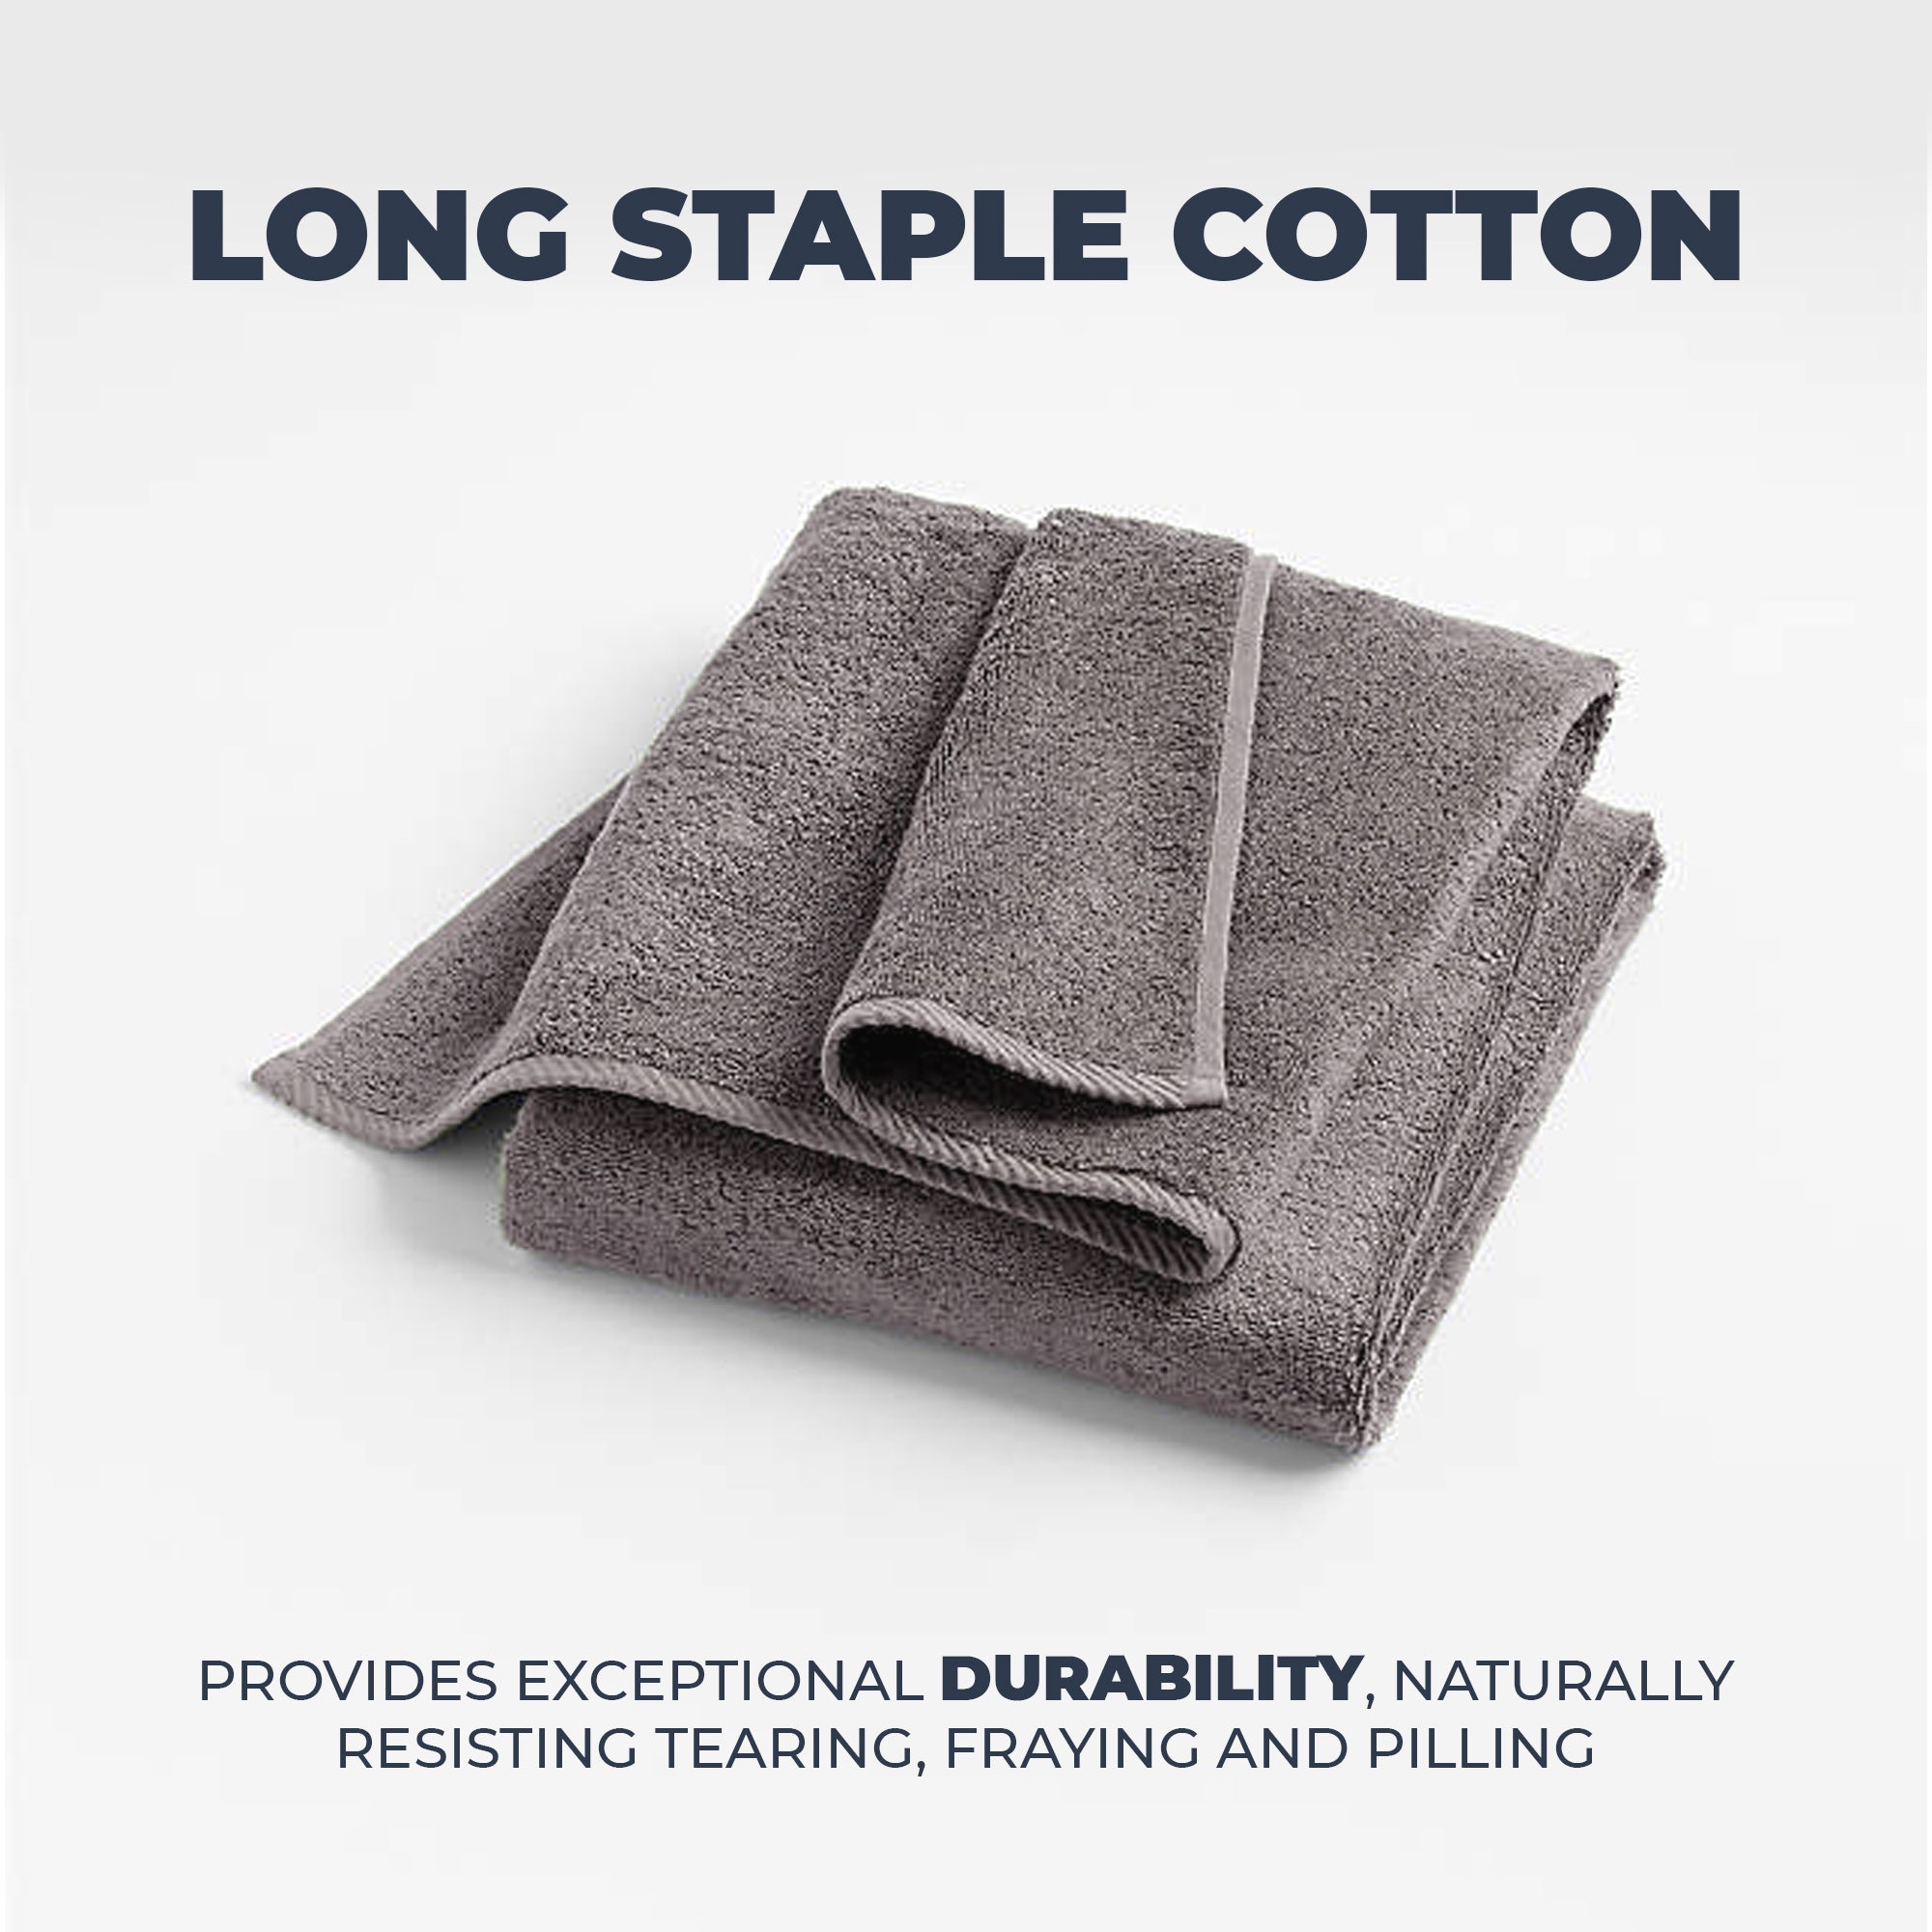 Stone Luxury Egyptian Cotton Towels - Sweave Bedding